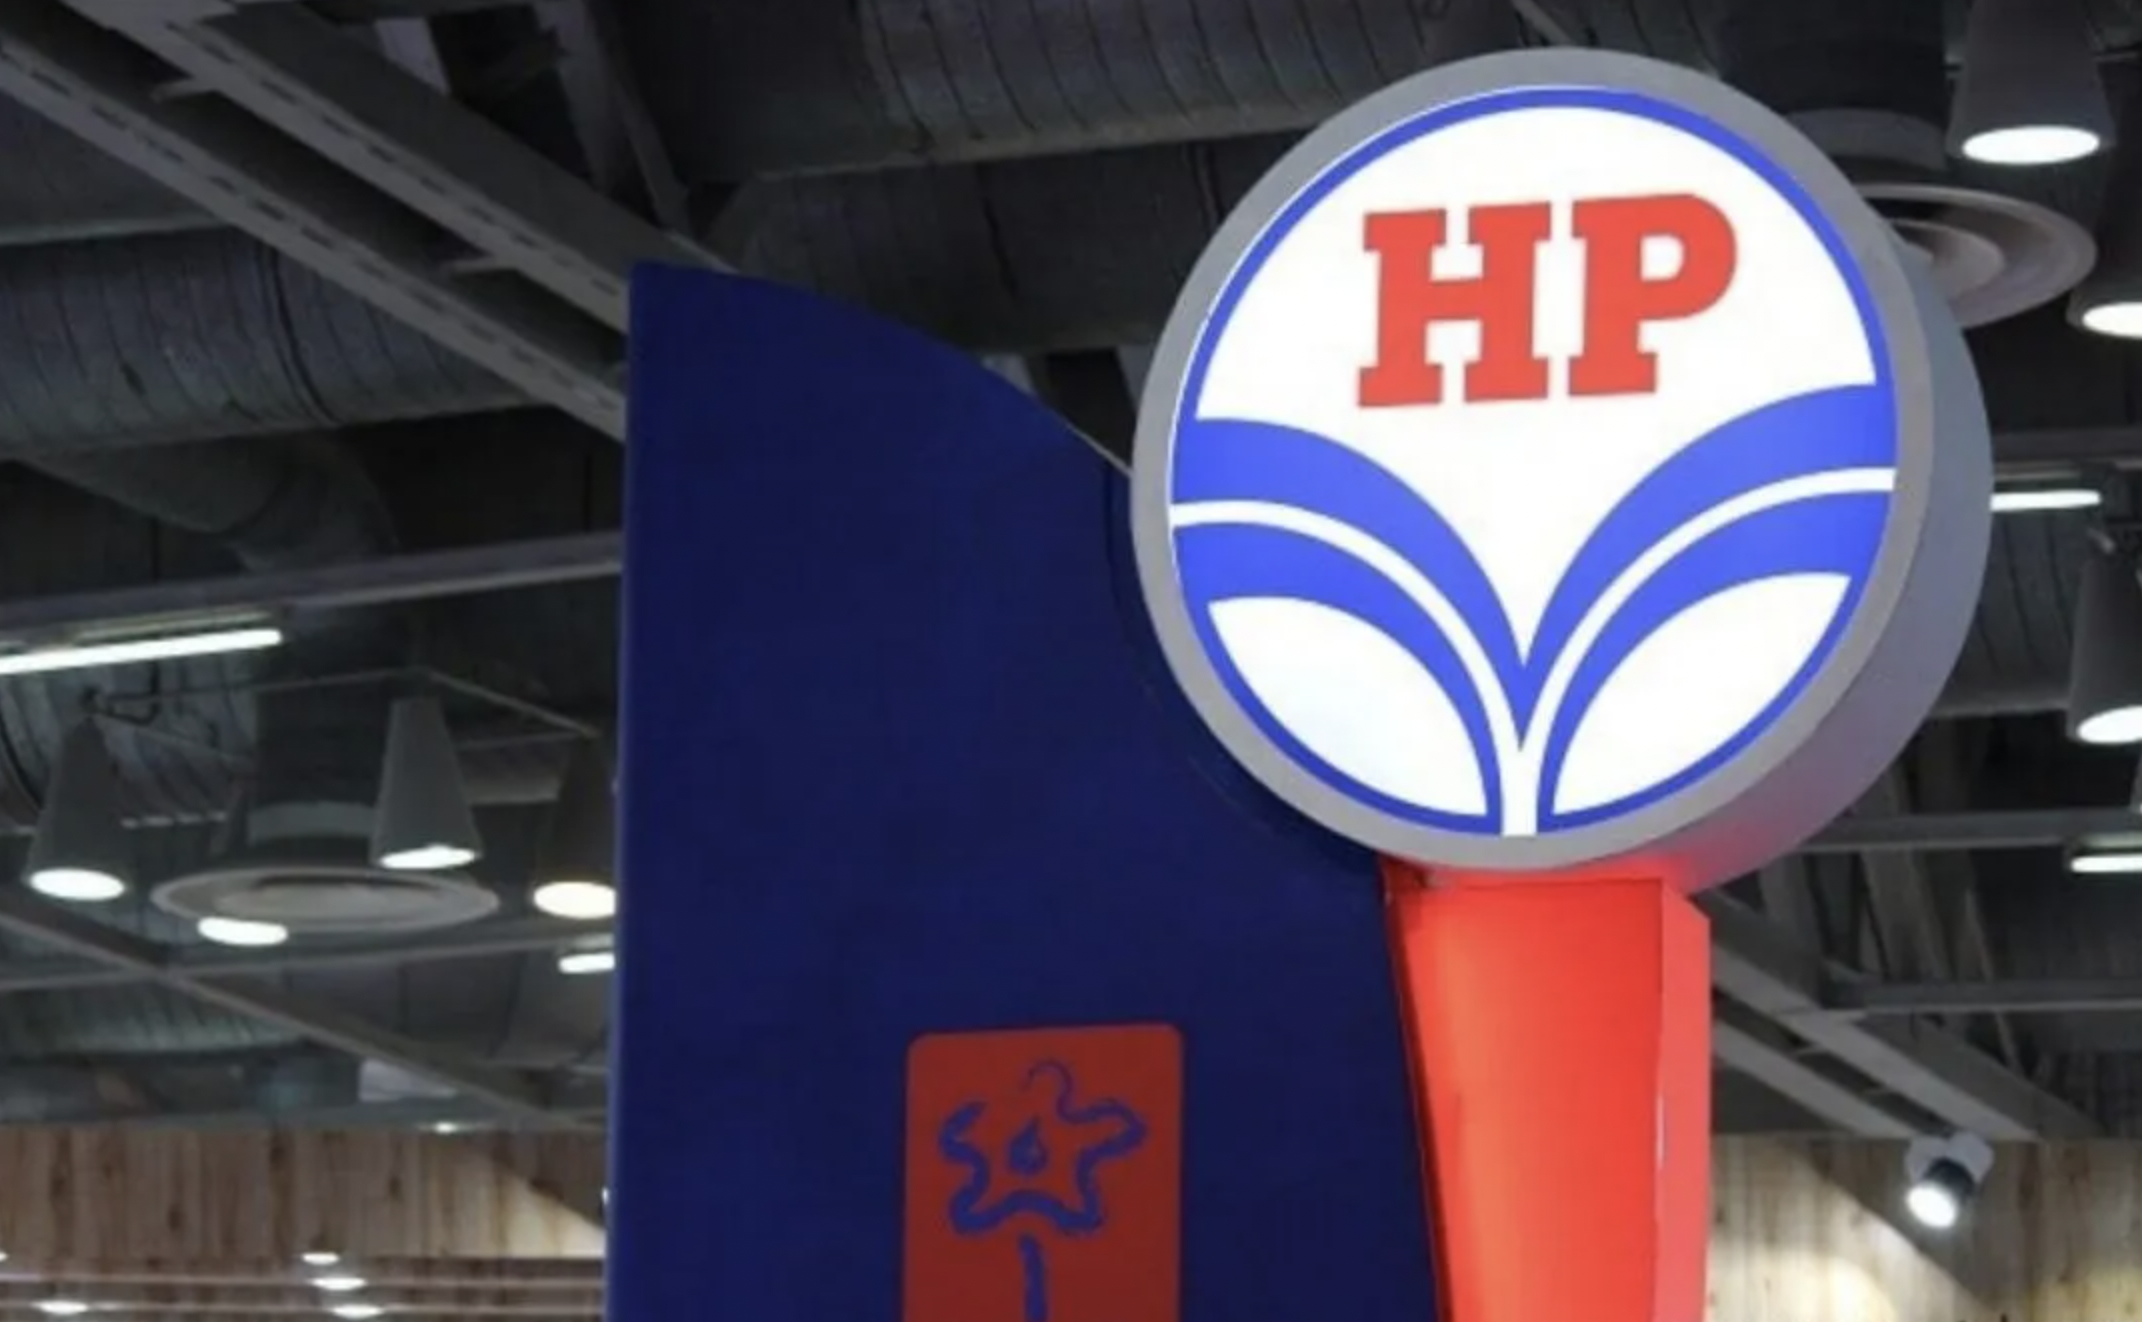 Led Acrylic HP Petrol Pump Logo, Shape: Round at Rs 3800/piece in Sanawad |  ID: 2852910839491